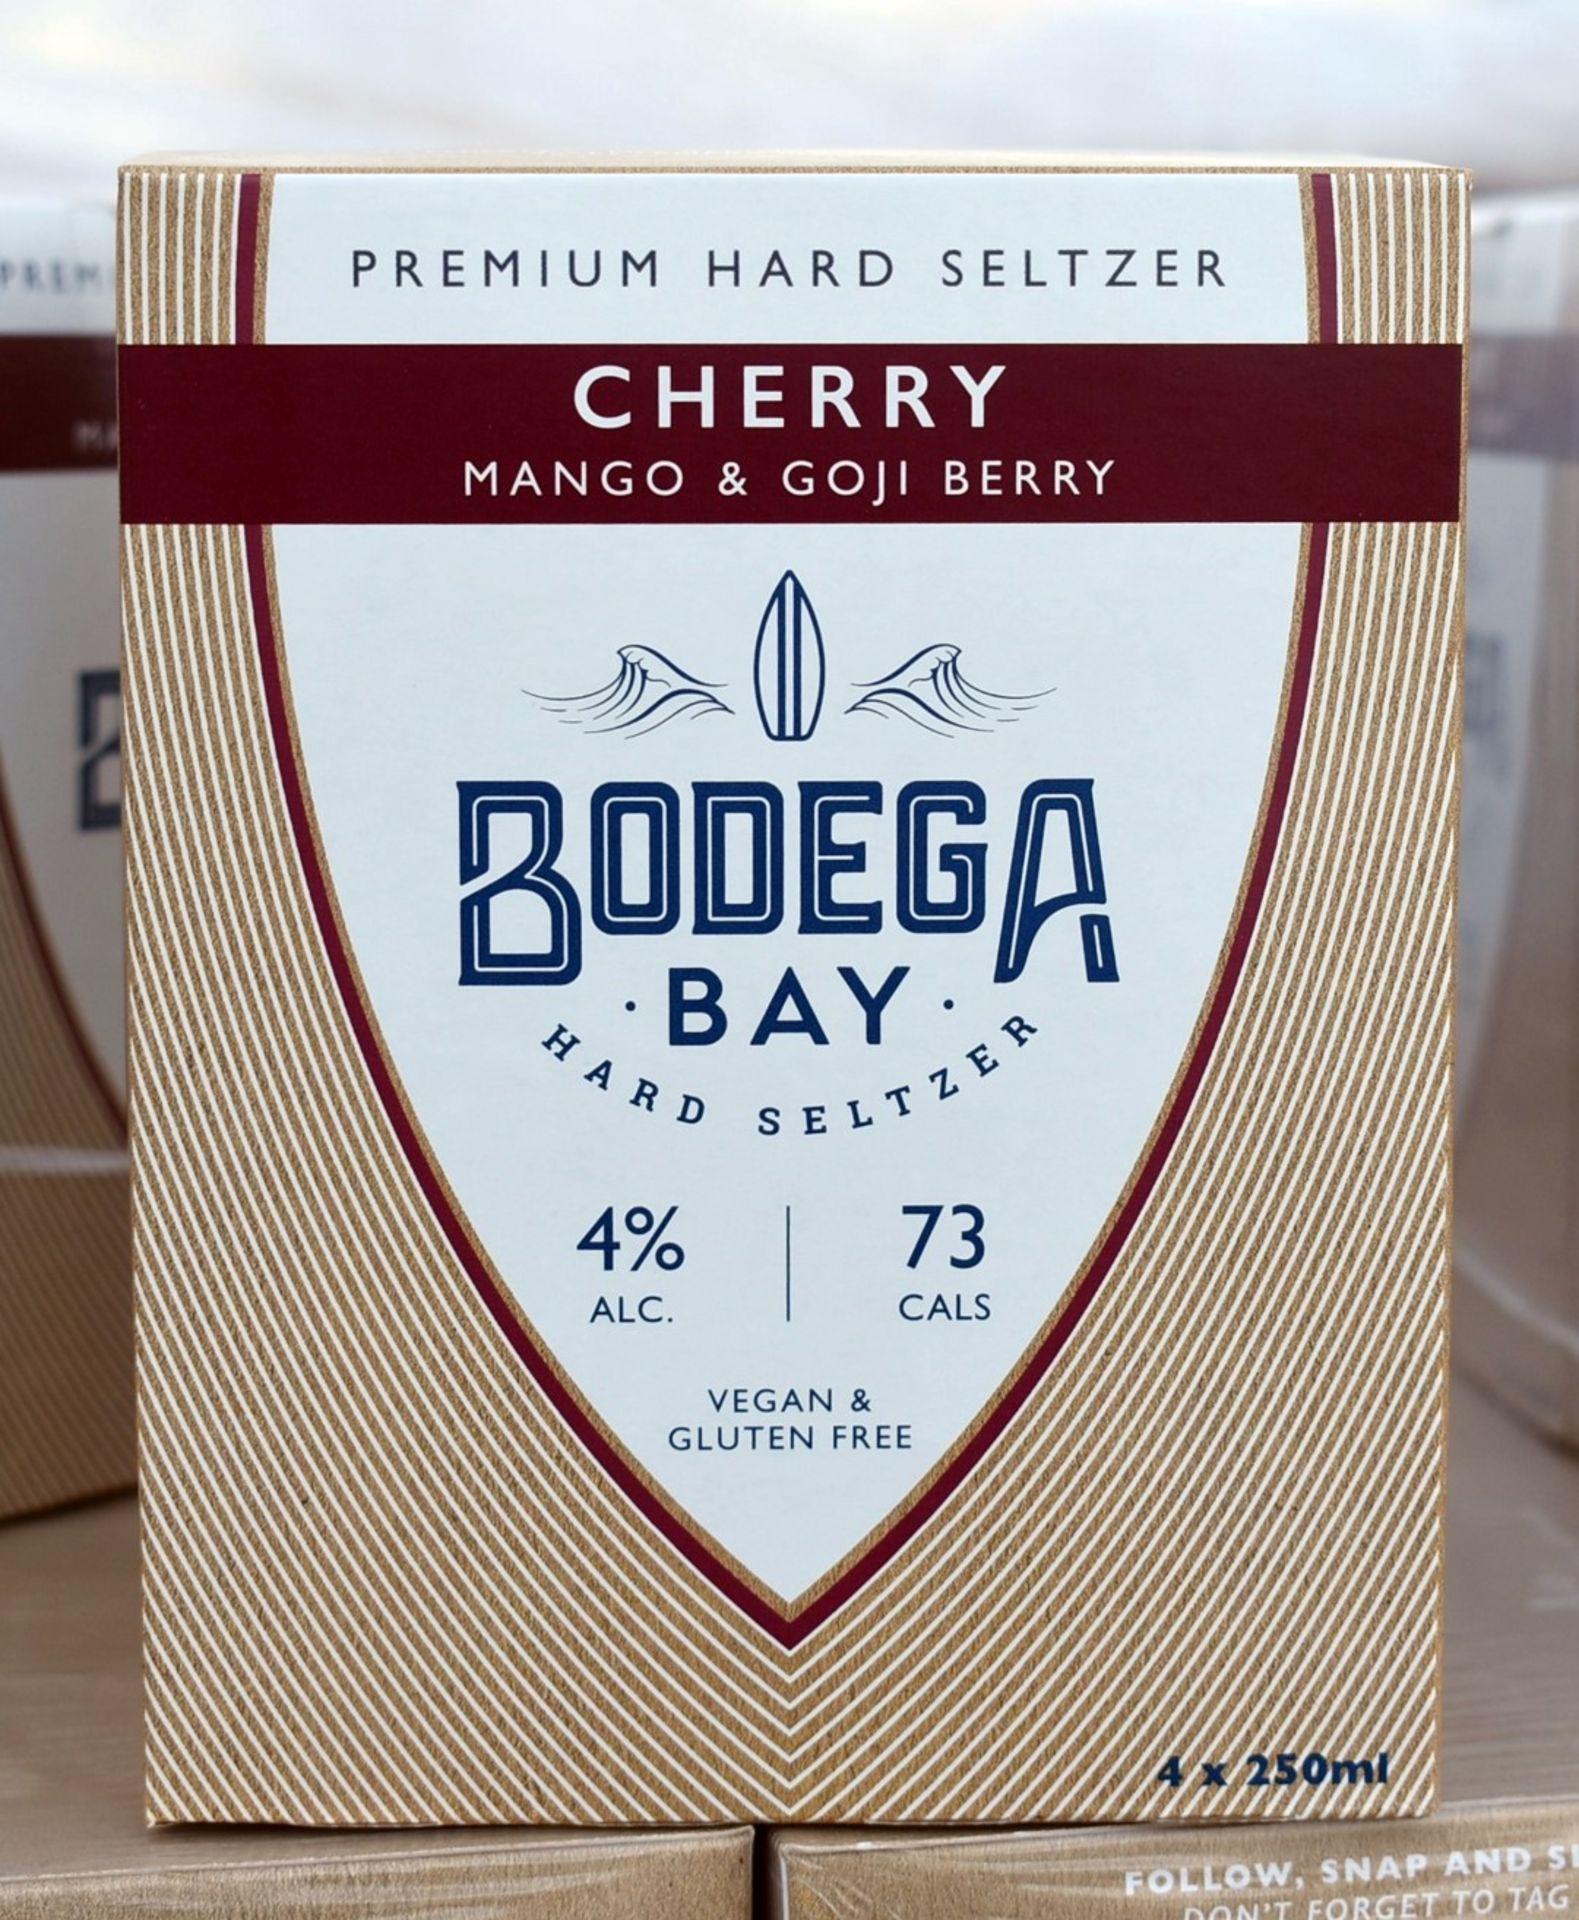 24 x Bodega Bay Hard Seltzer 250ml Alcoholic Sparkling Water Drinks - Cherry Mango & Goji Berry - Image 2 of 4